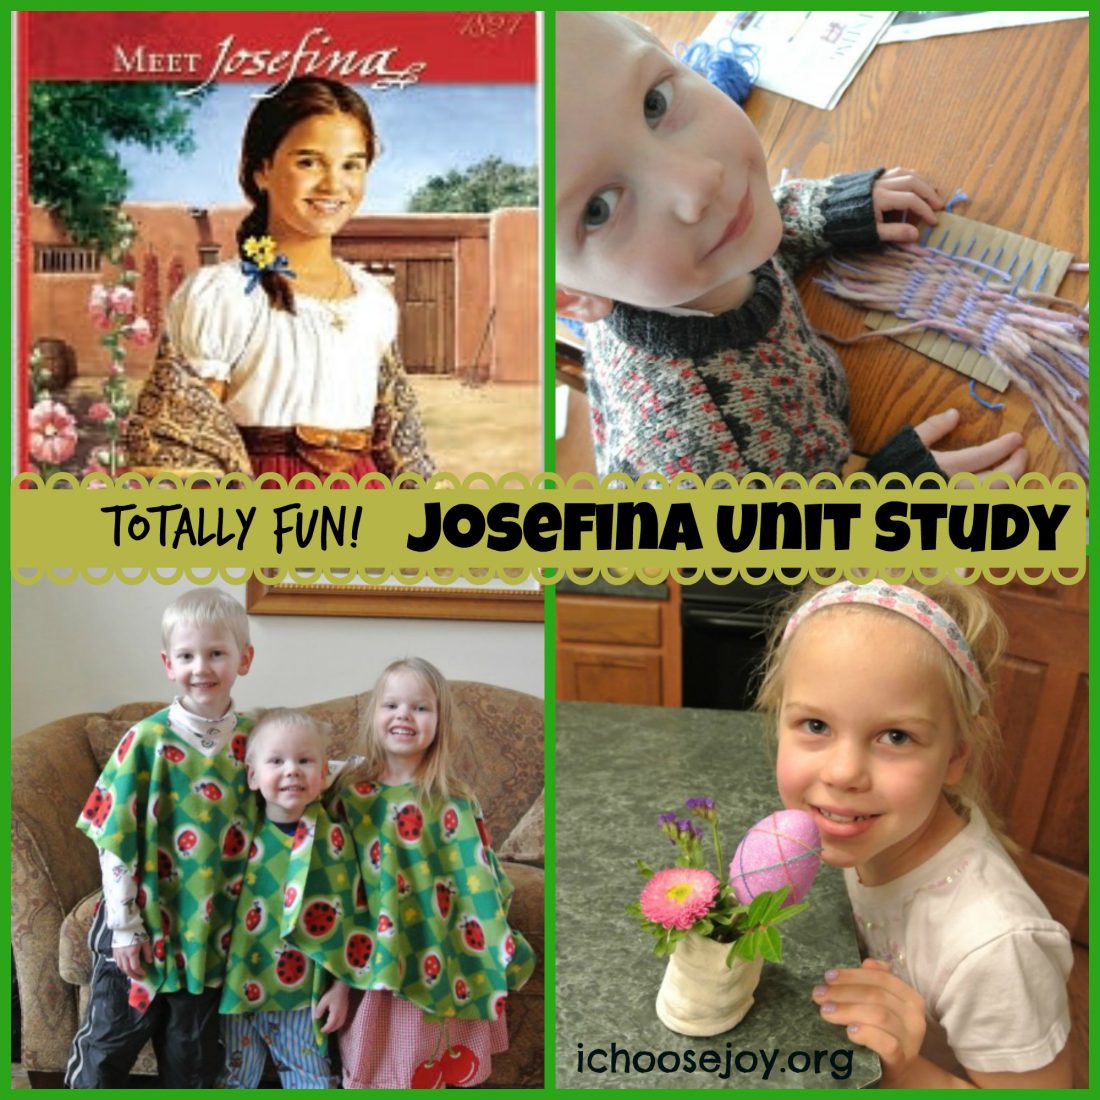 Your Kids will LOVE this American Girl Josefina Unit Study Like Mine Did